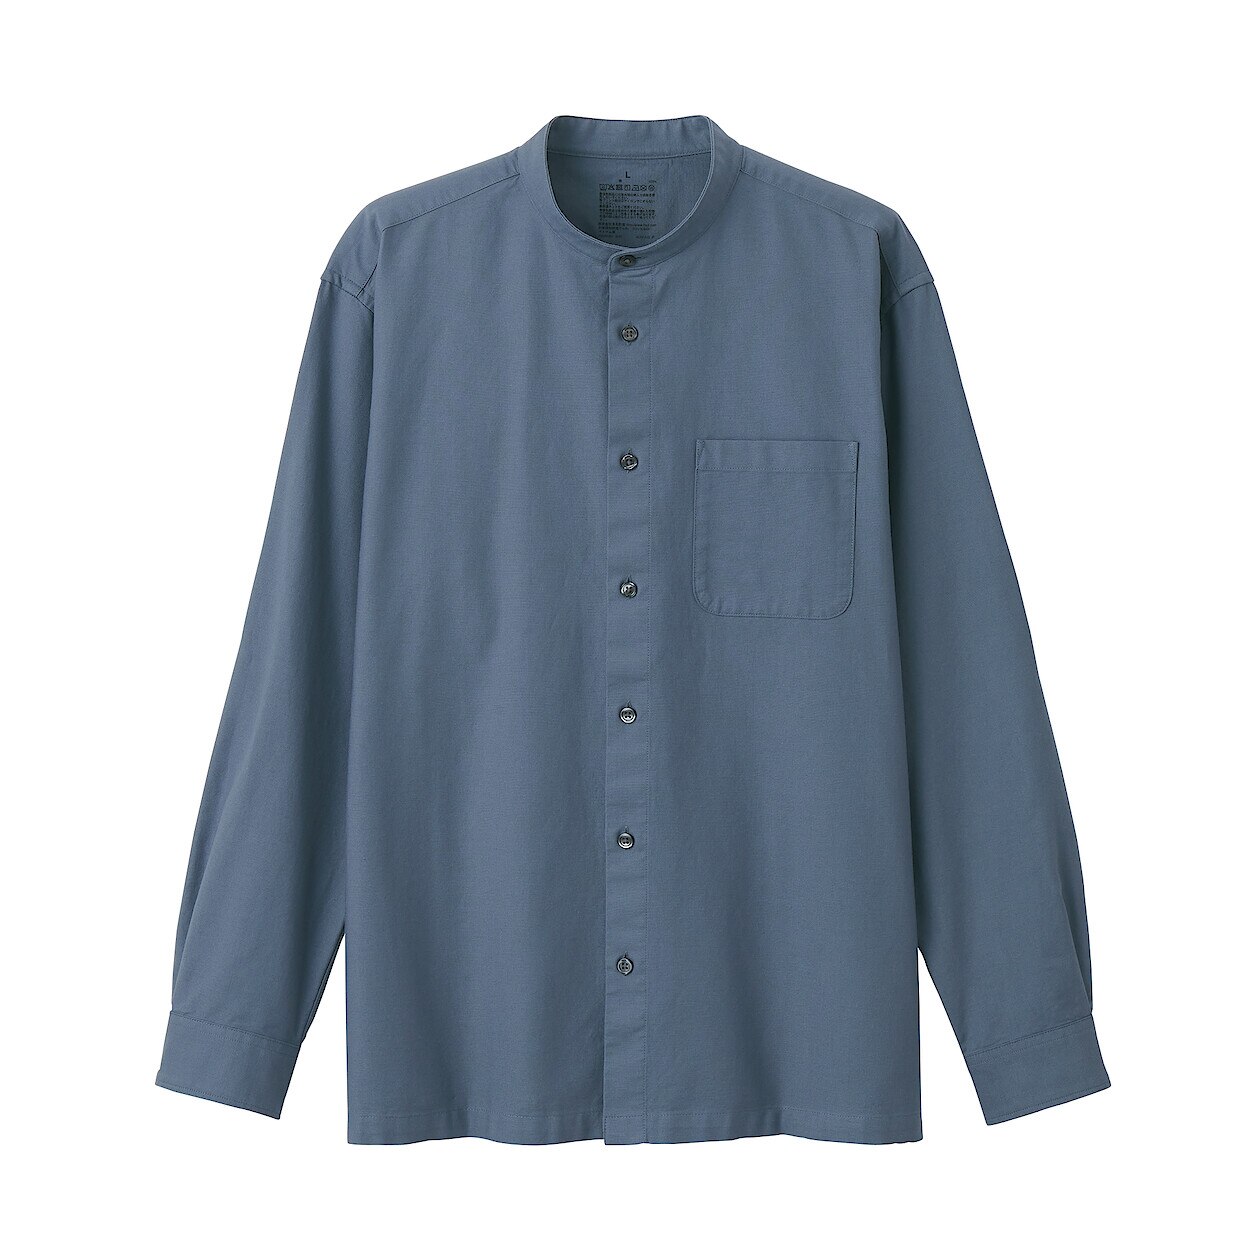 Shop Washed Oxford Stand Collar Shirt online | Muji Qatar